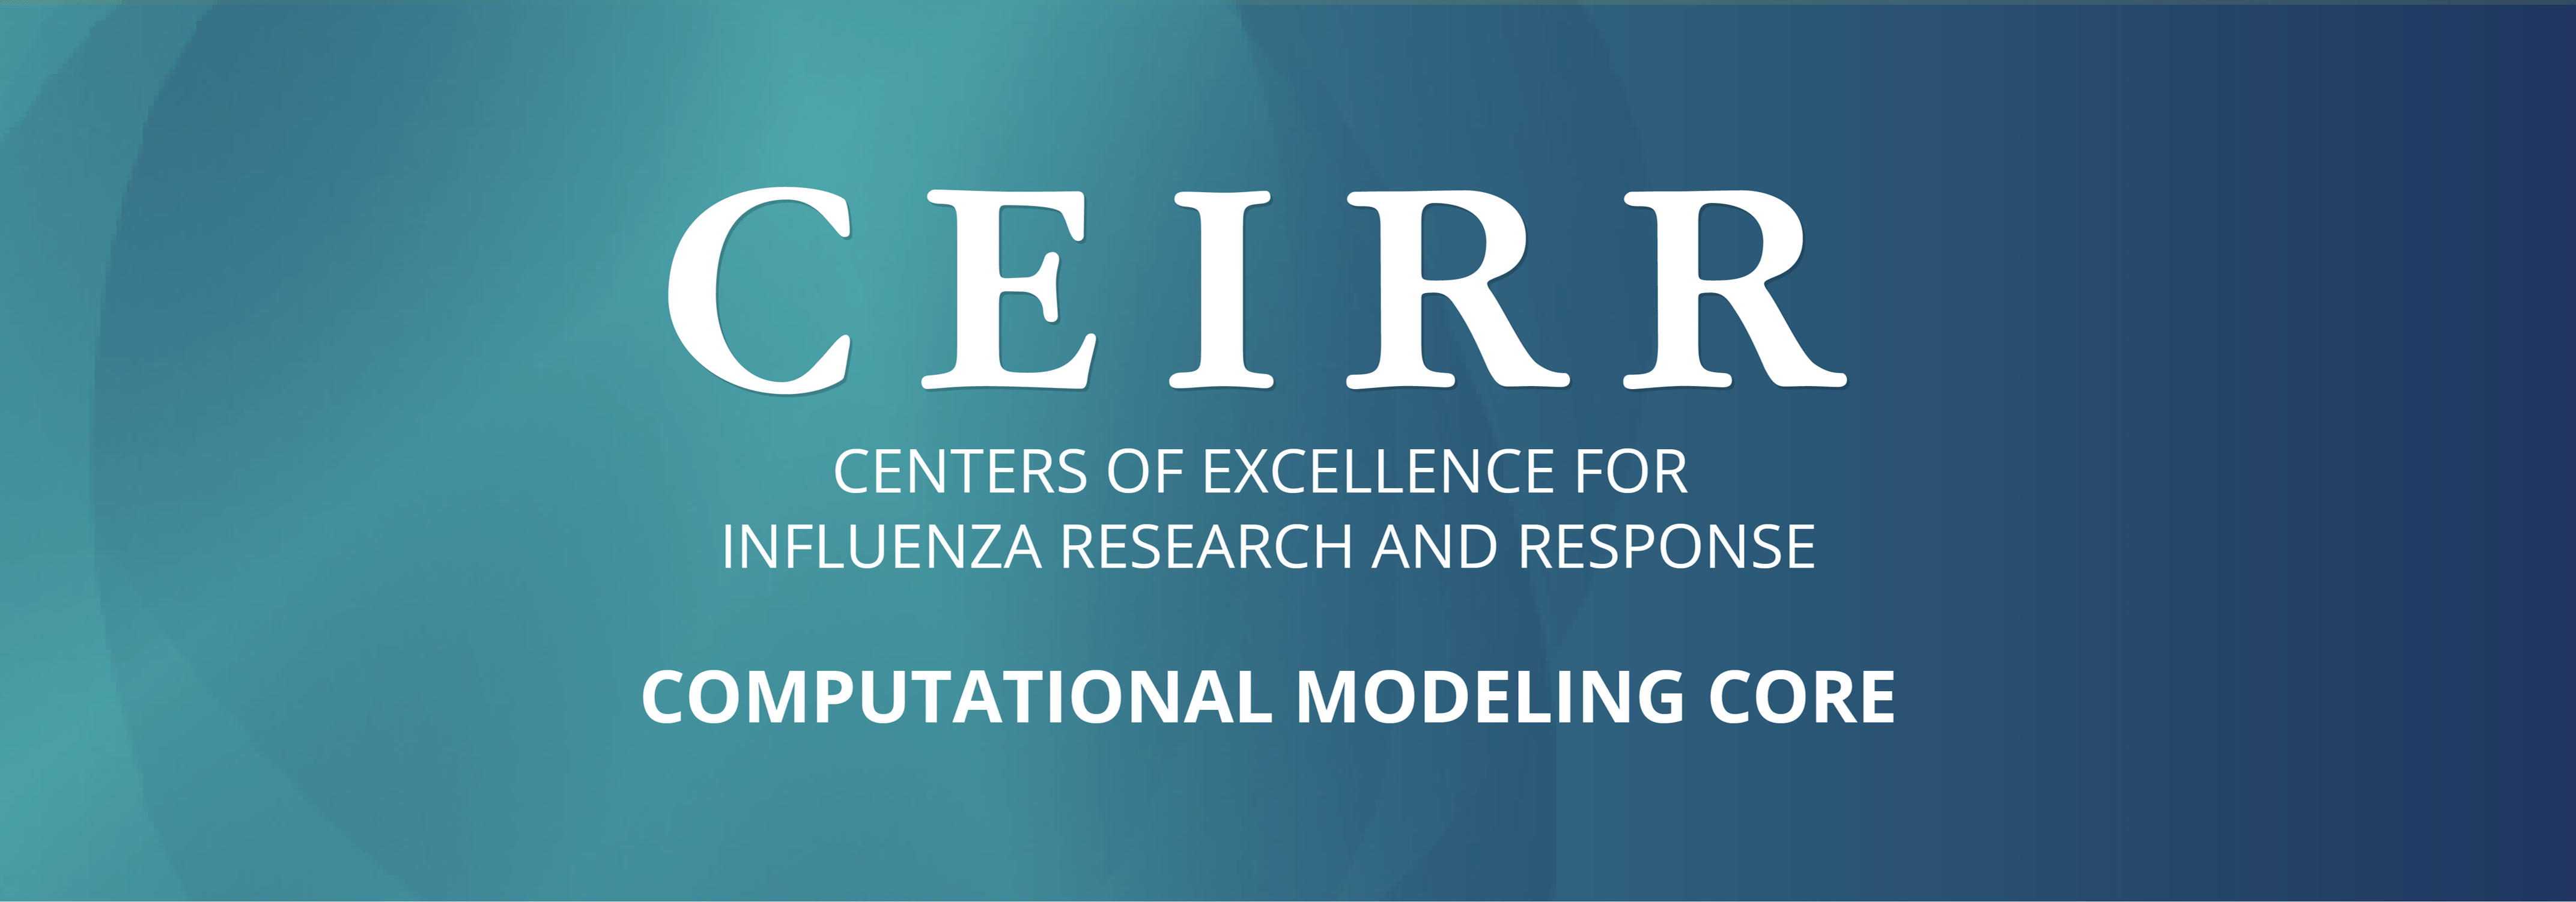 CEIRR Computational Modeling Core